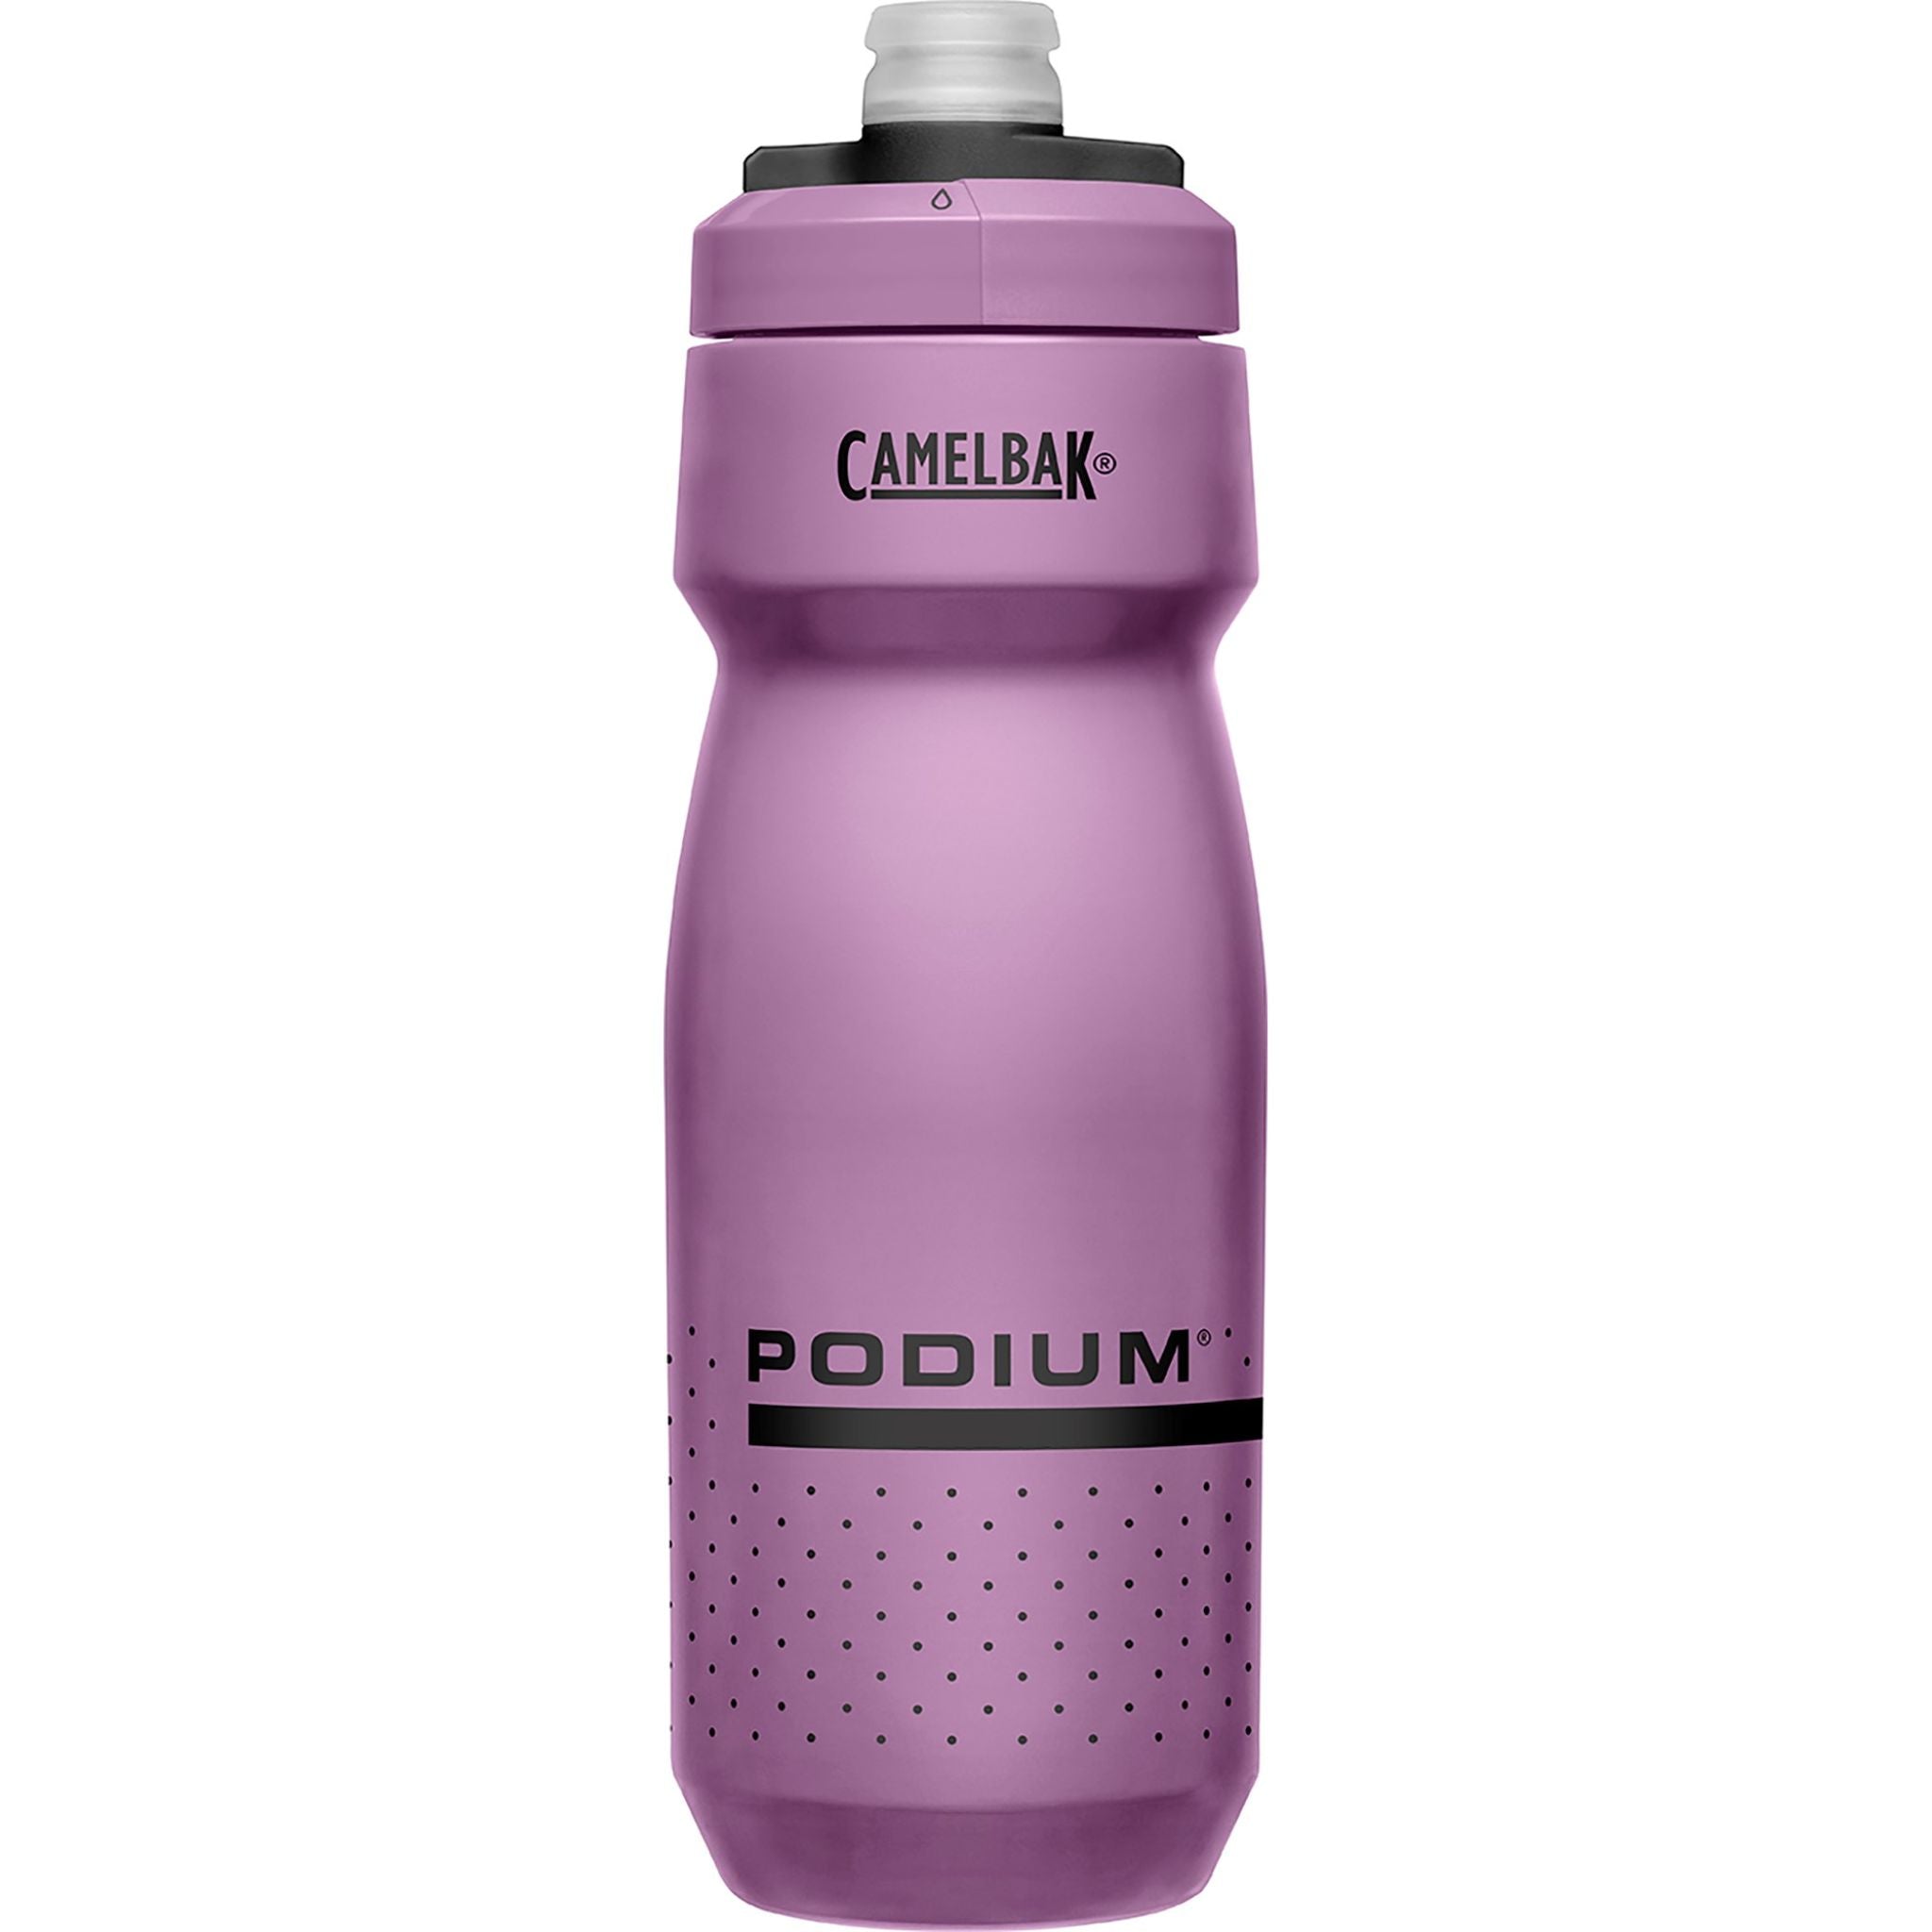 Camelbak Podium 700ml Water Bottle